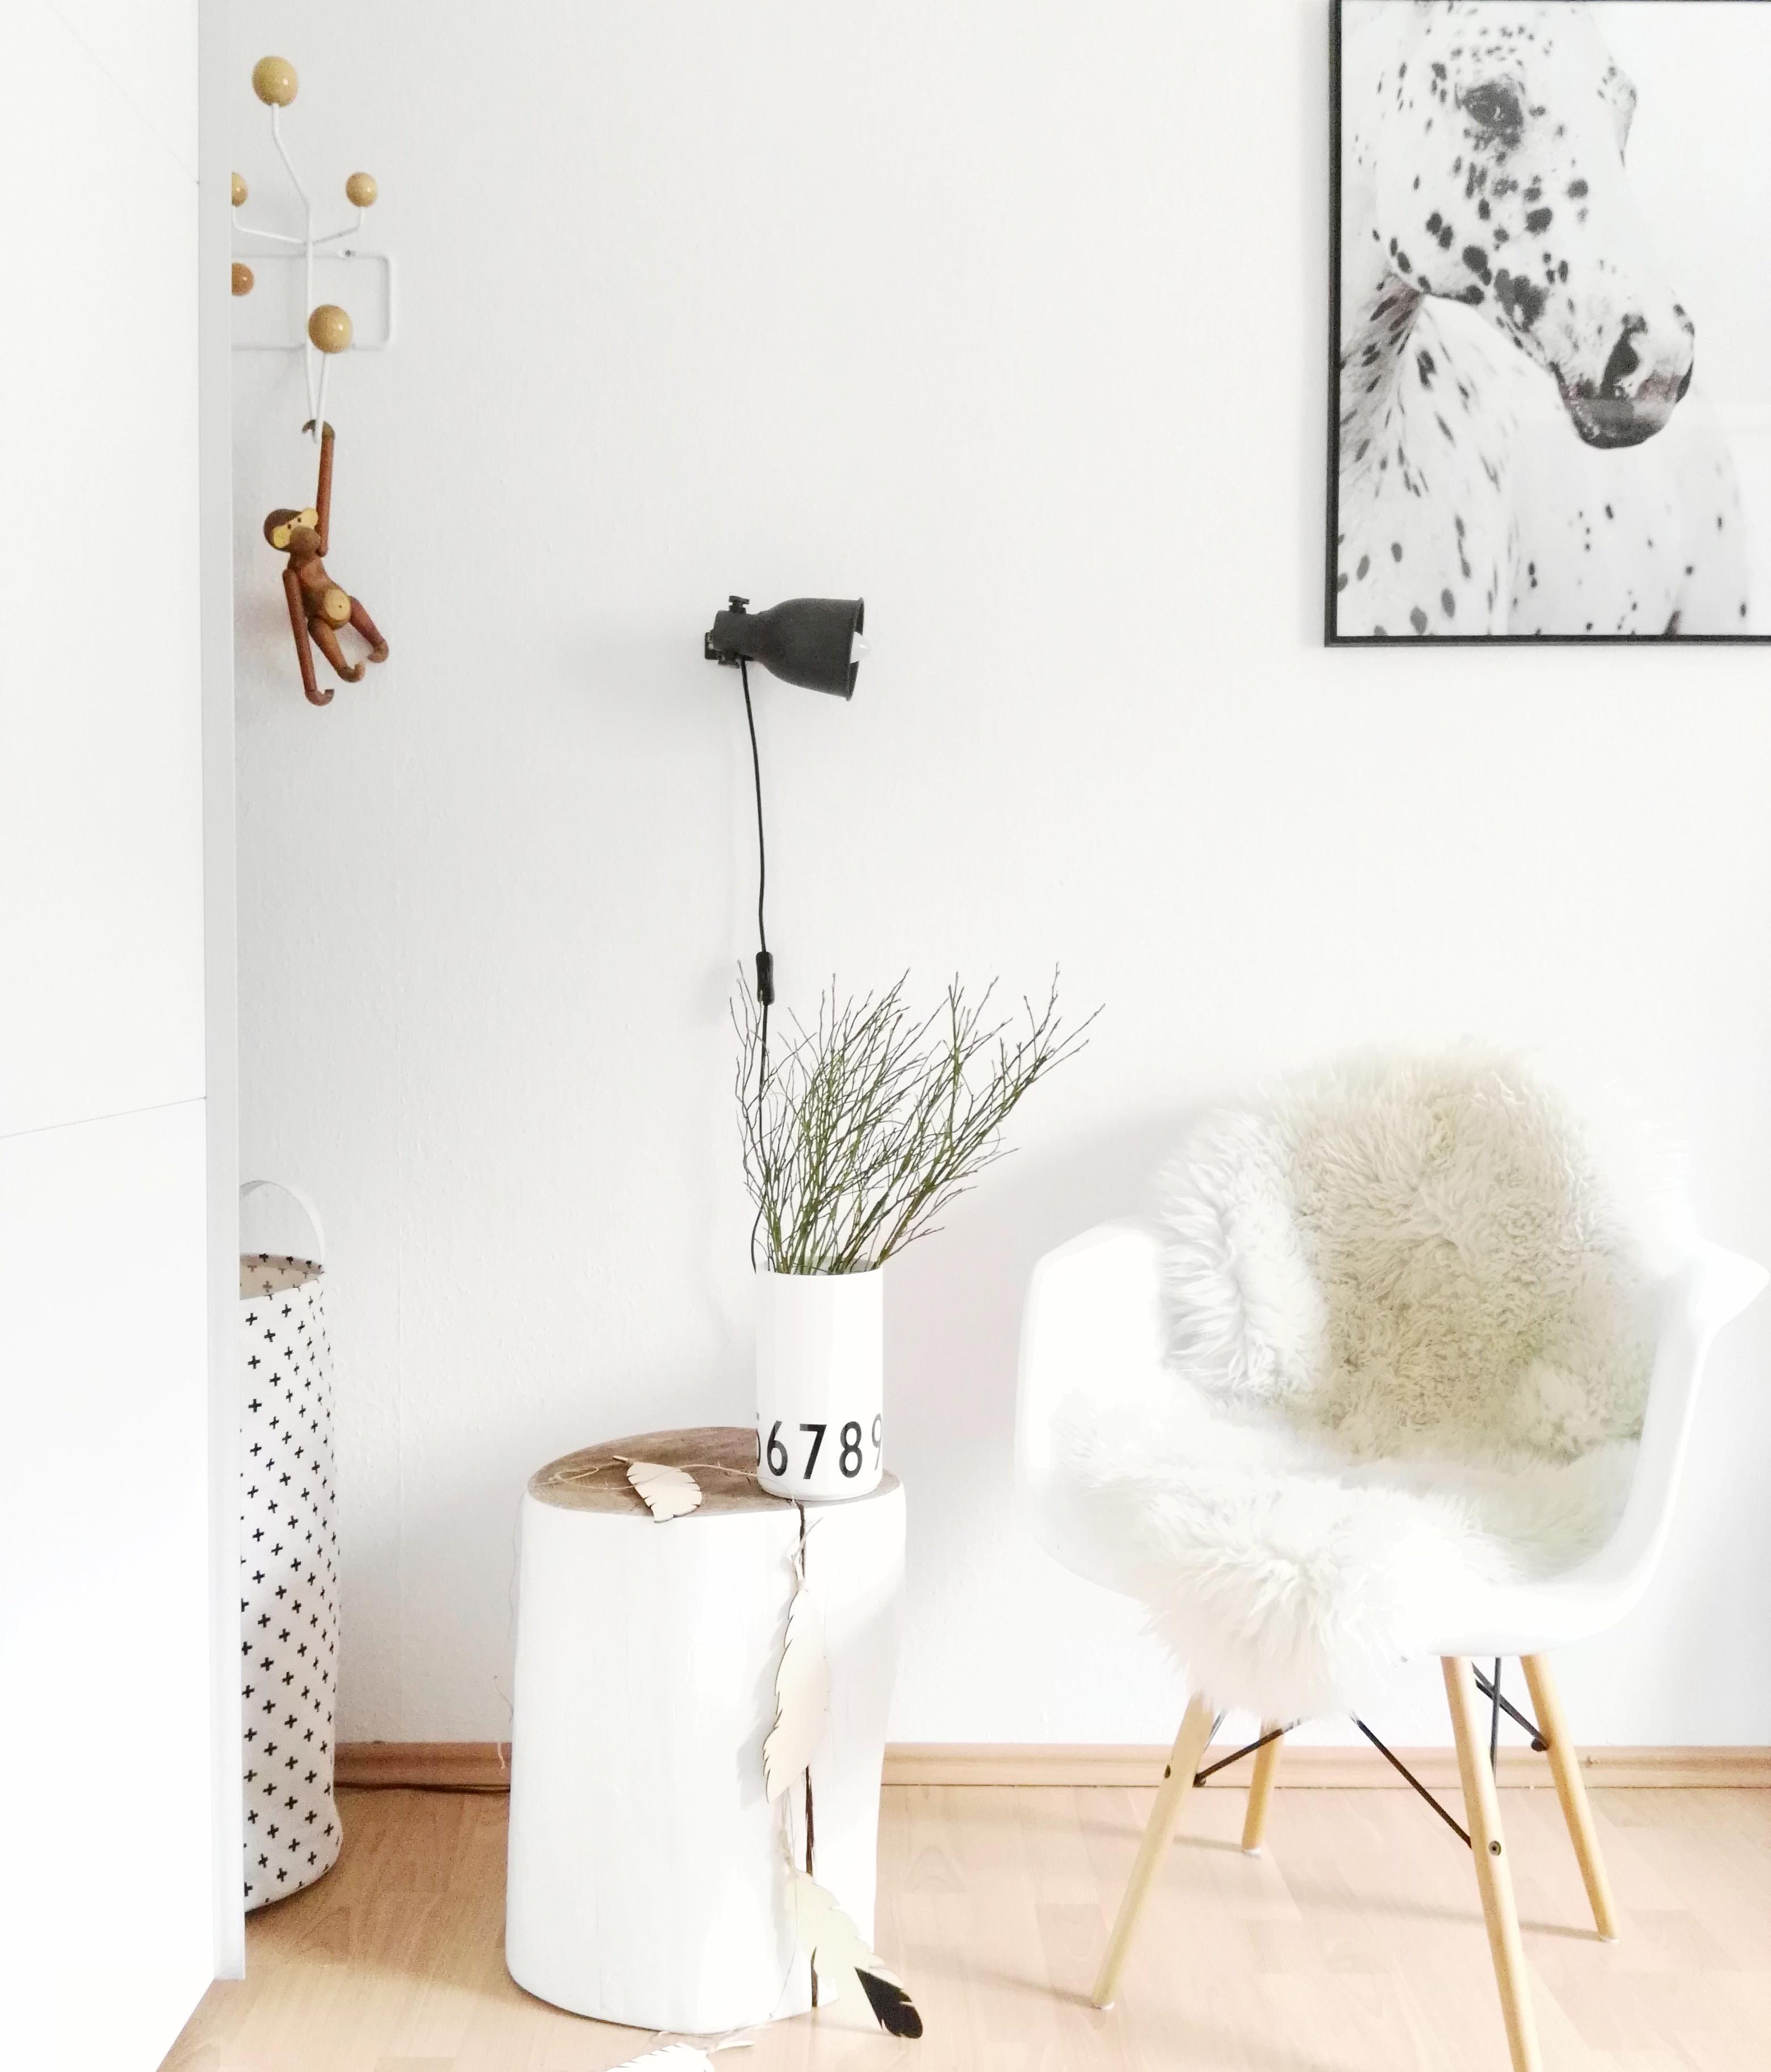 Schlafzimmerbereich...
#print #Pferd #eames #Hangitall #Garderobe #designletters #Vase #kaybojesen #affe #skandinavisch